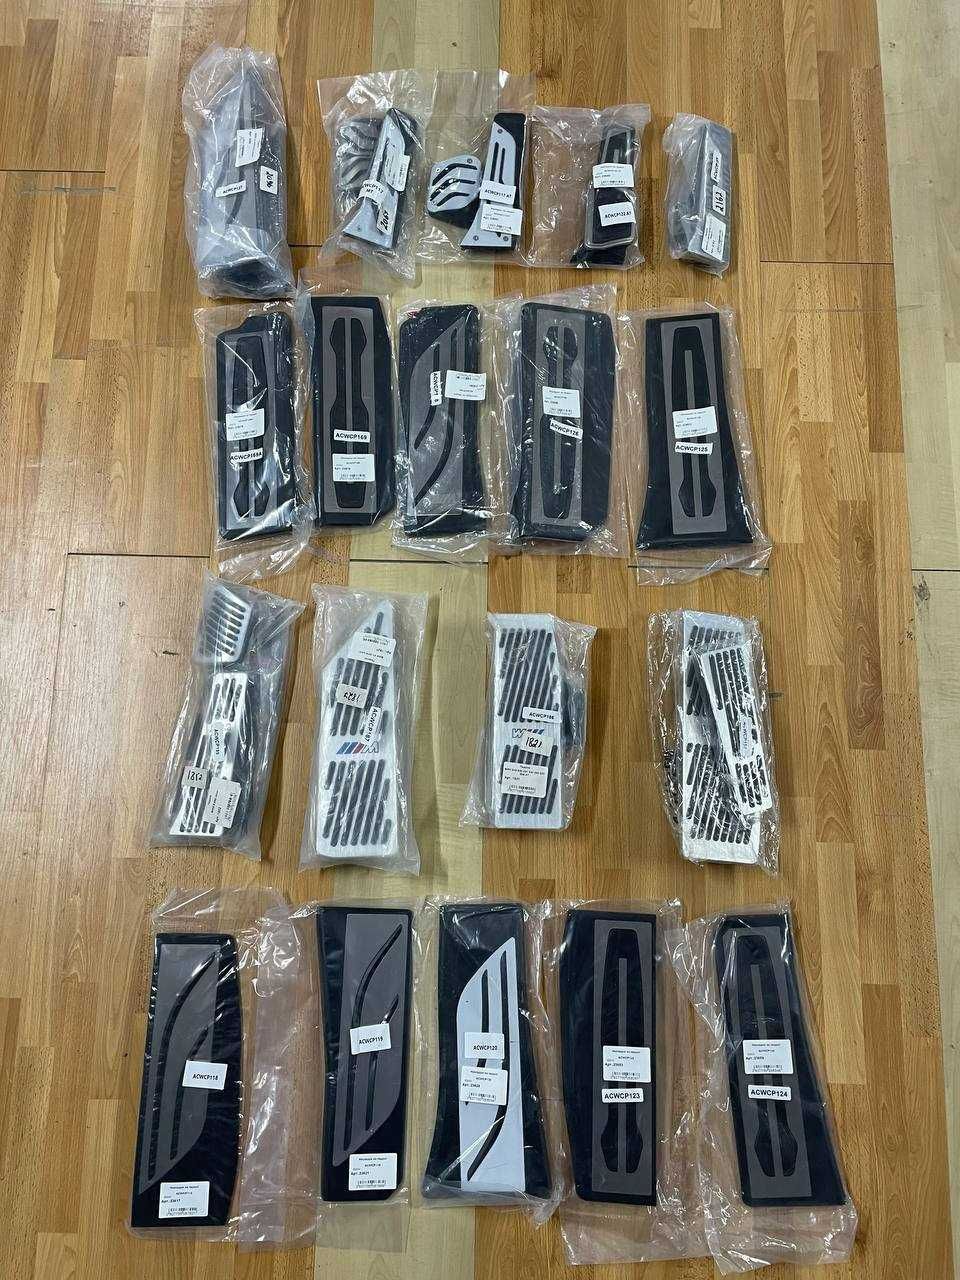 накладки на педали BMW на разные модели накладки бмв 5 серия 3 5 7 х5